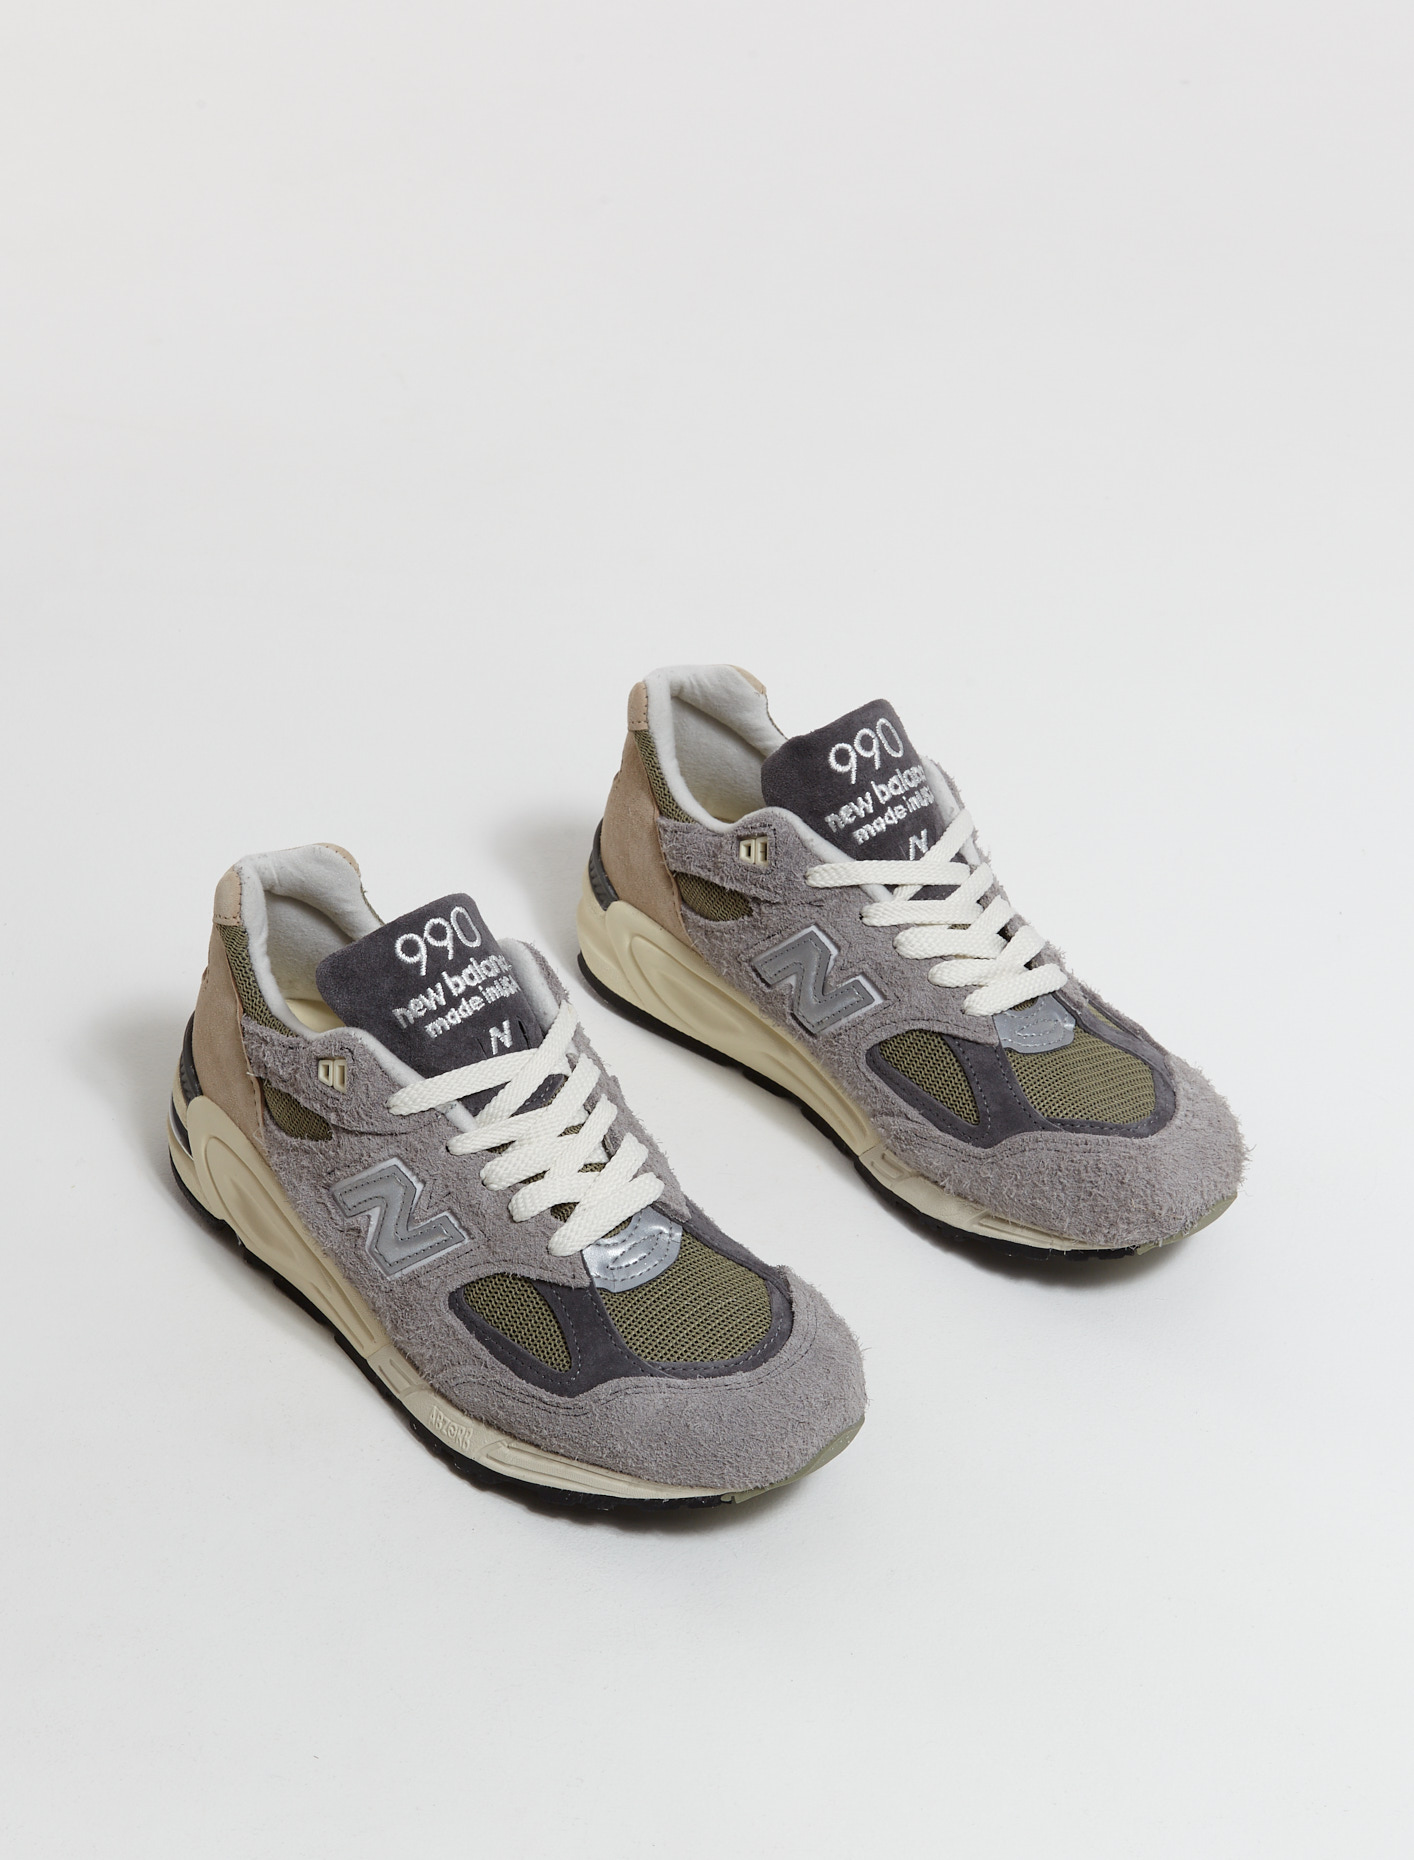 New Balance 990 v2 'MiUSA by Teddy Santis' Sneaker in Marblehead | Voo